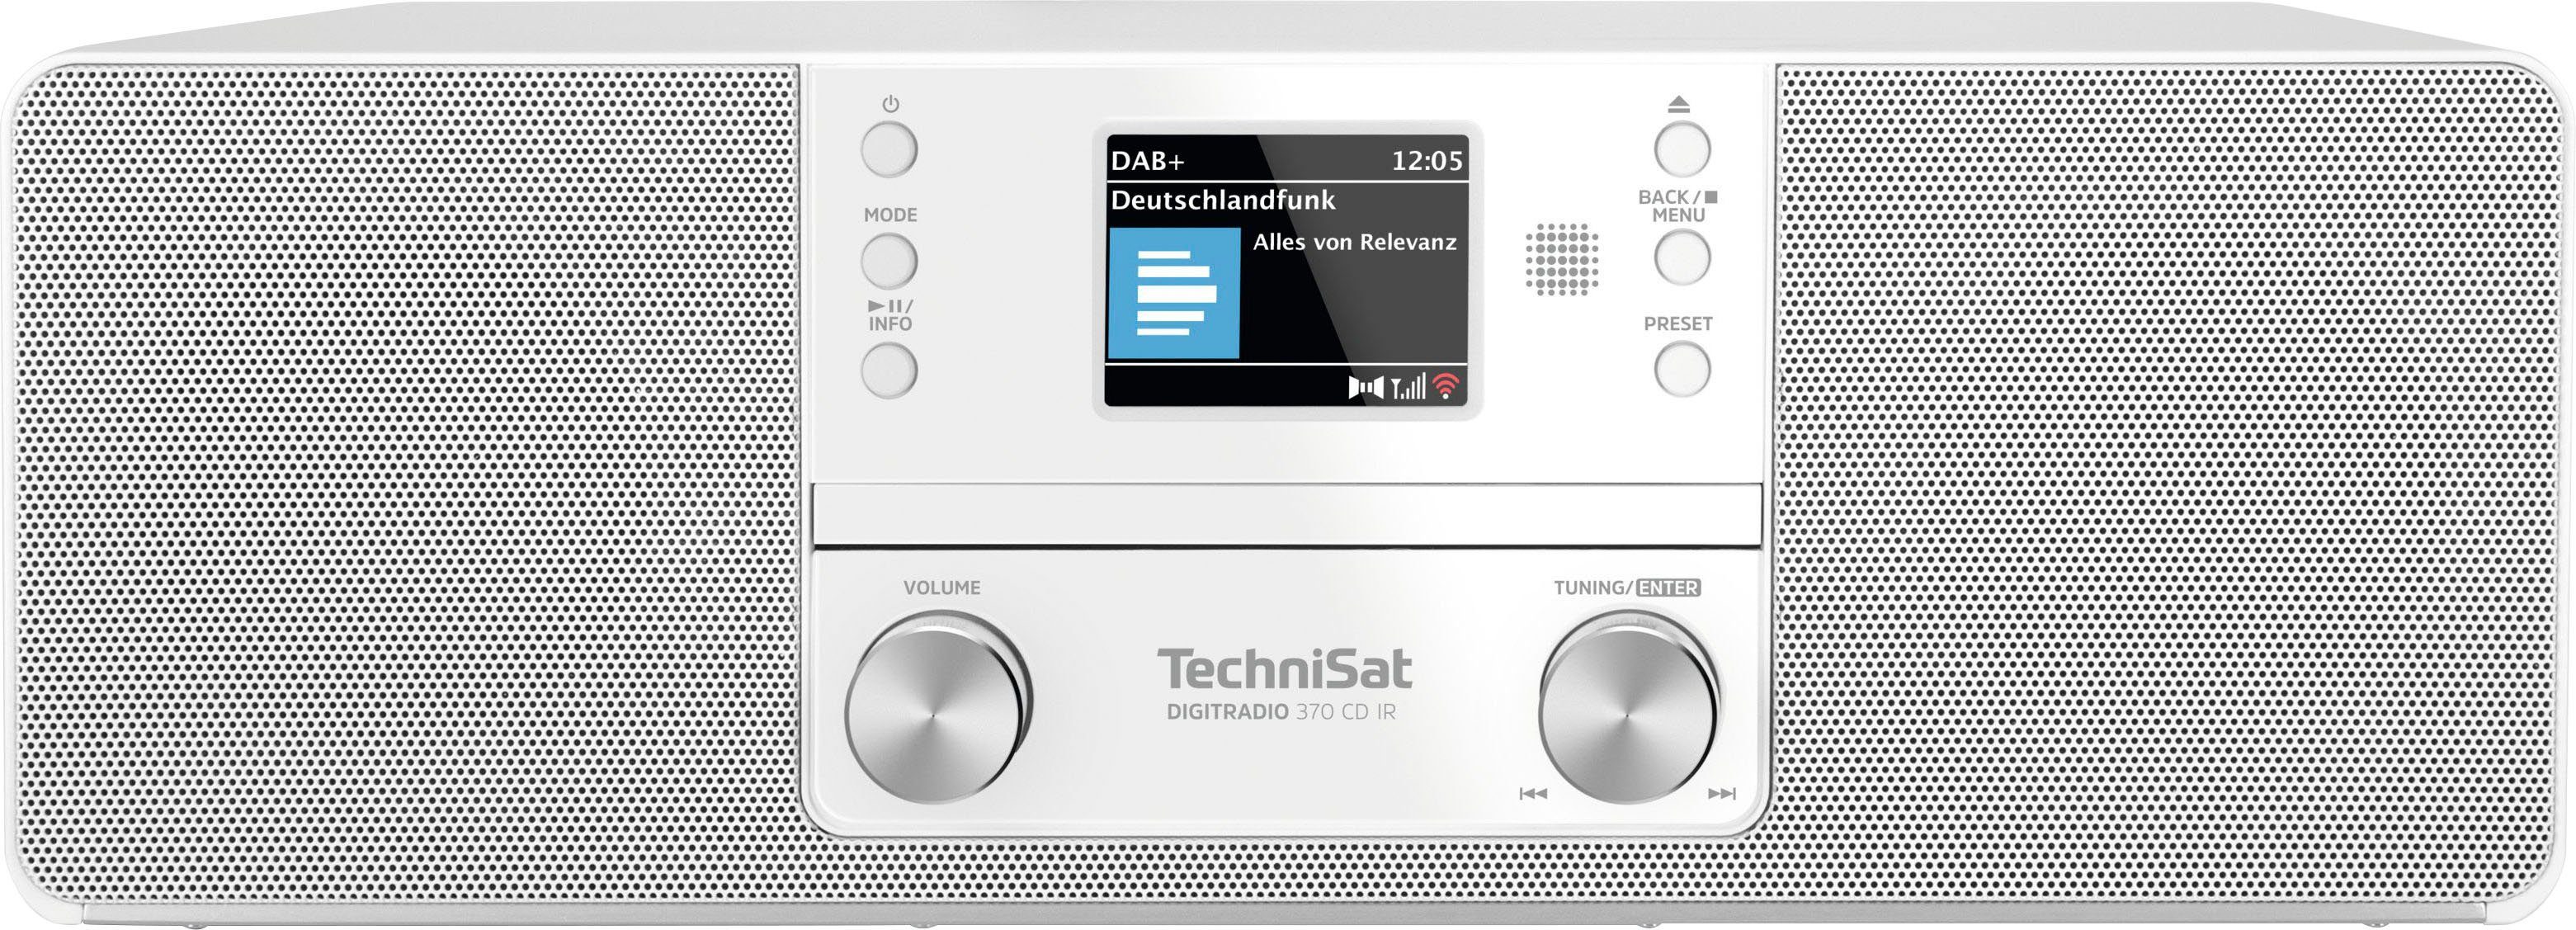 TechniSat DIGITRADIO IR (DAB), W) (DAB) UKW CD 370 RDS, 10 Digitalradio (Digitalradio mit weiß